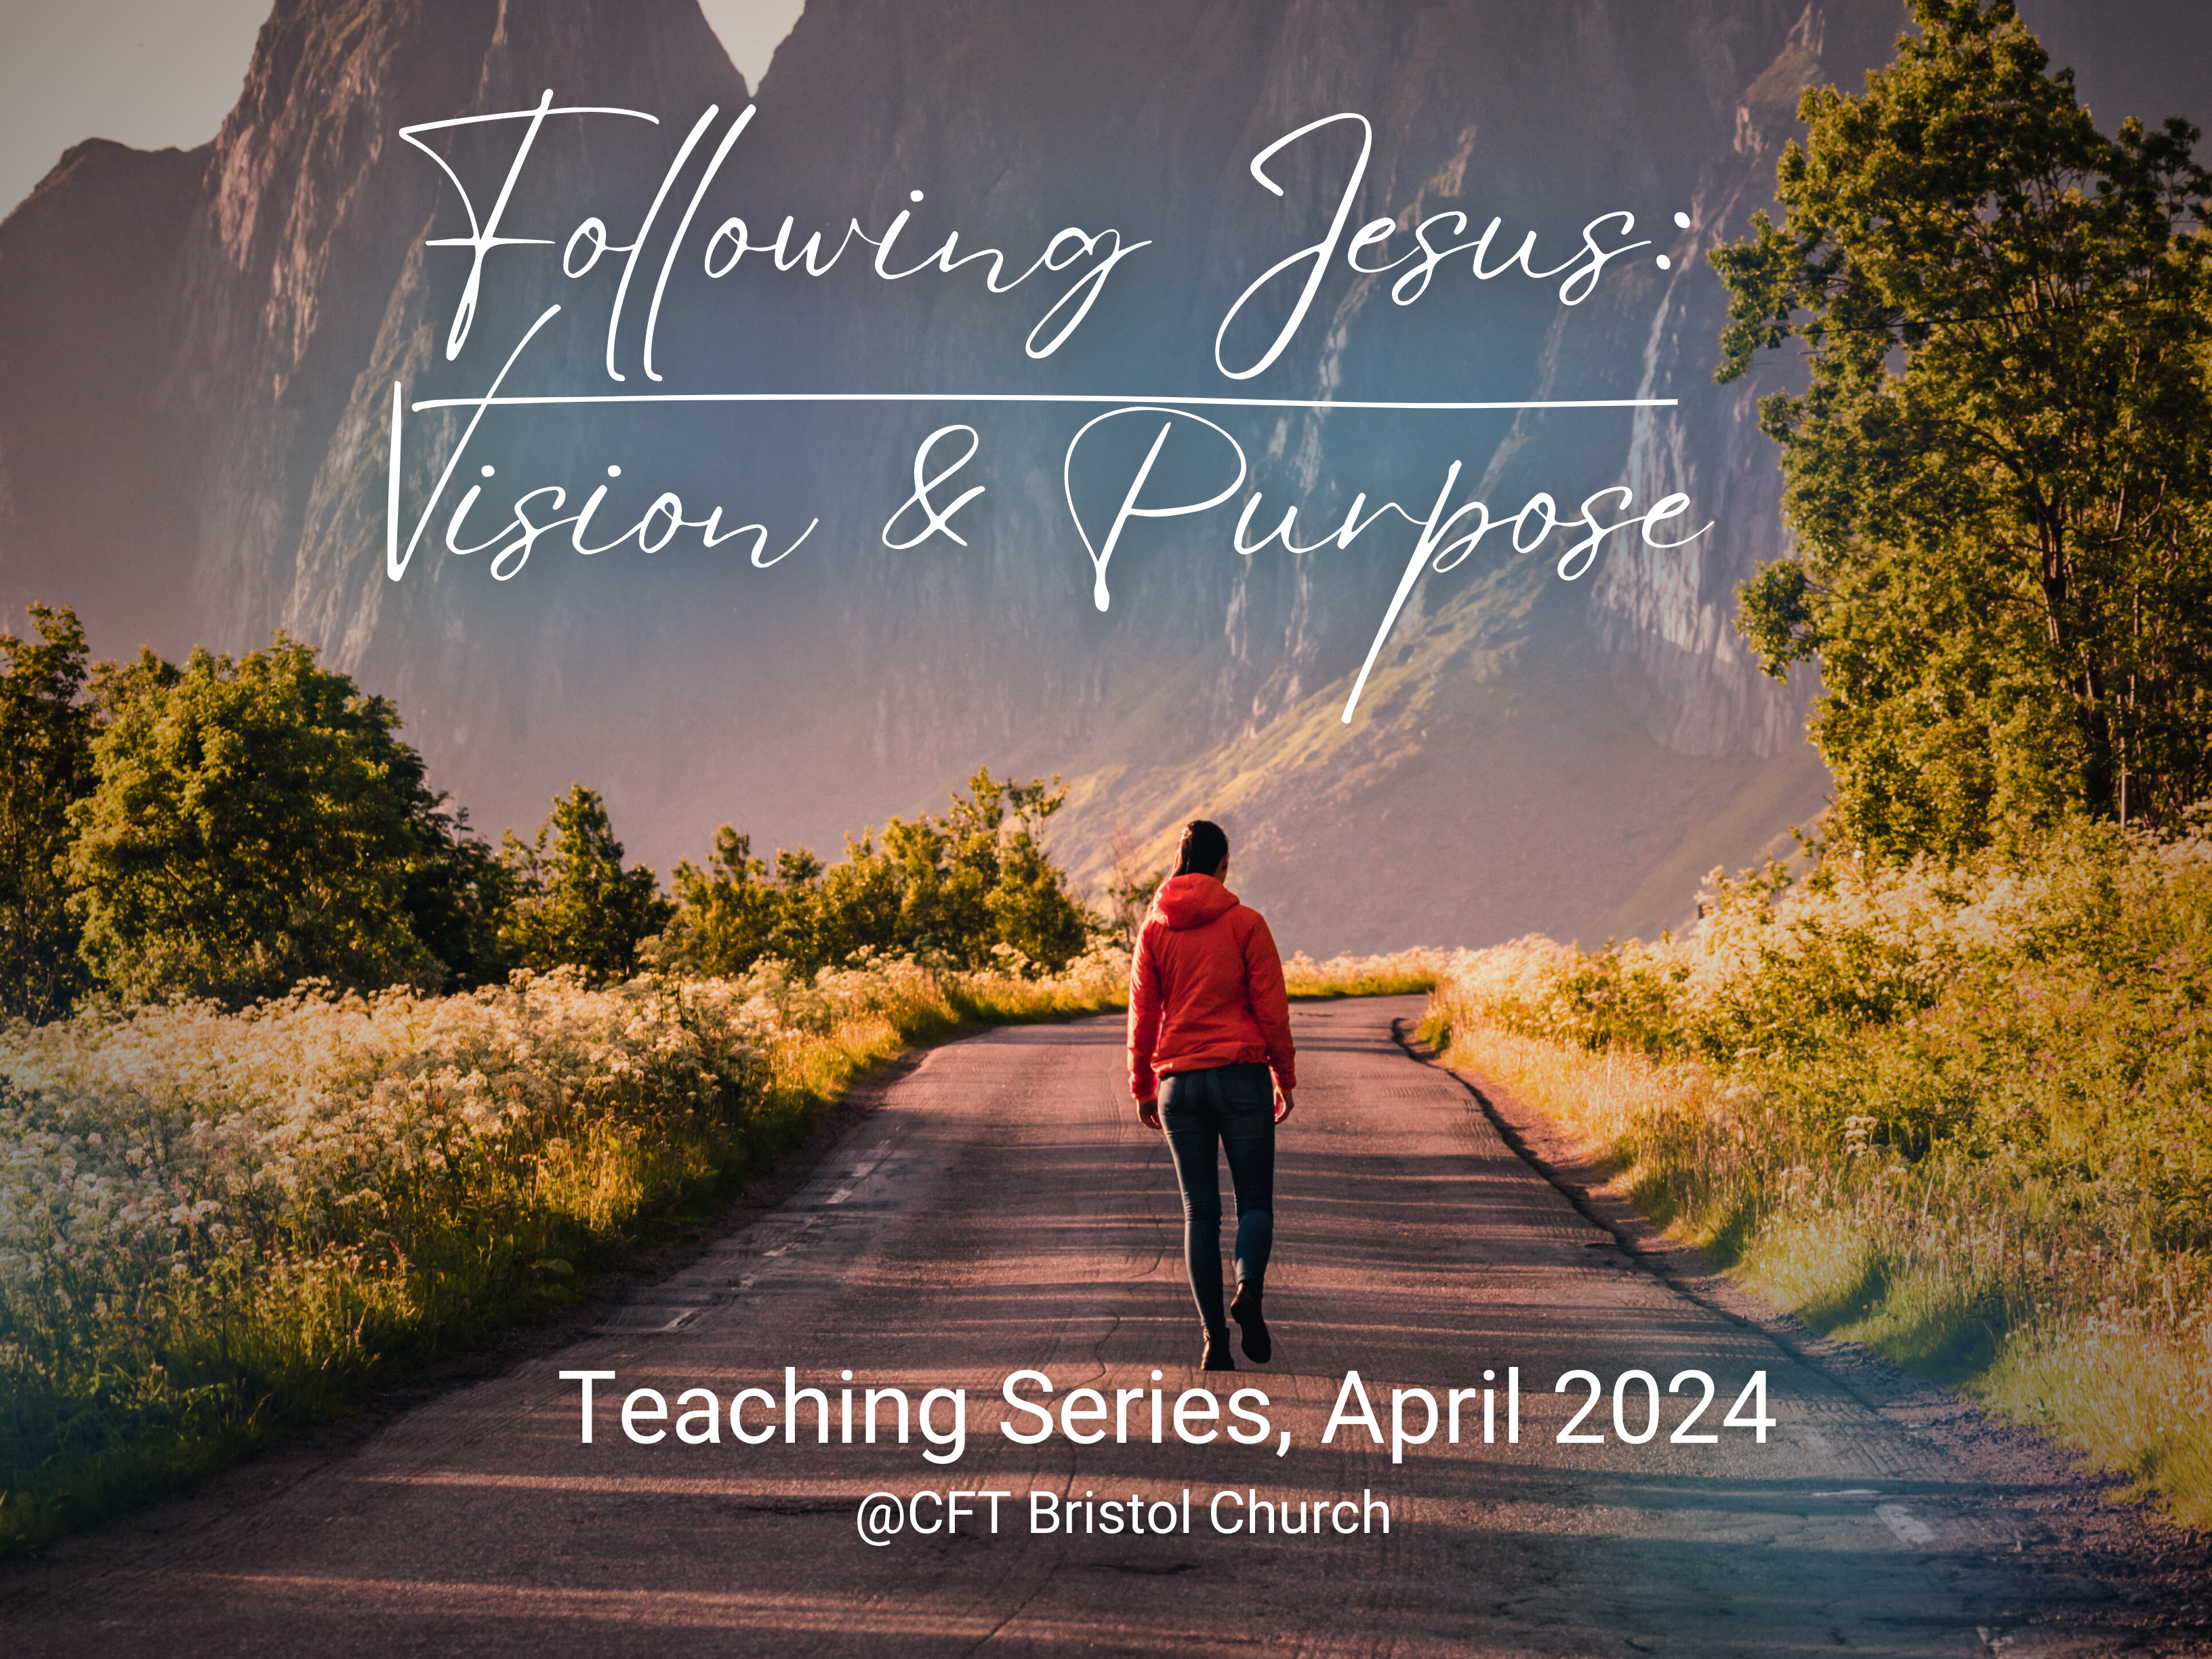 Following Jesus, Vision & Purpose